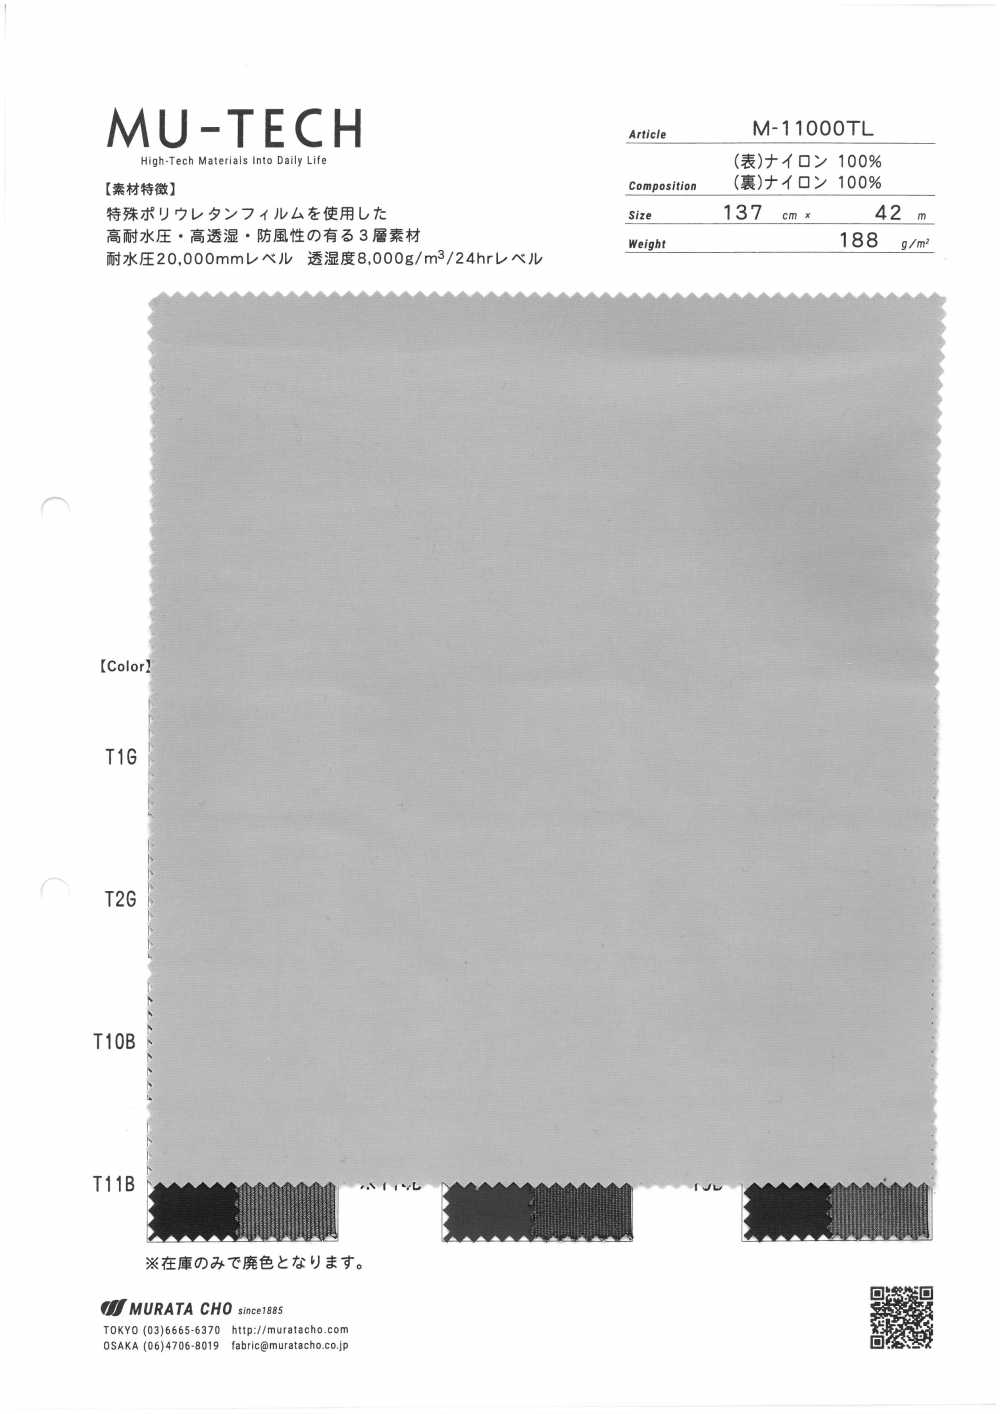 M-11000TL Hochleistungs-3-Lagen-Nylon-Fuzzy[Textilgewebe] Muratacho